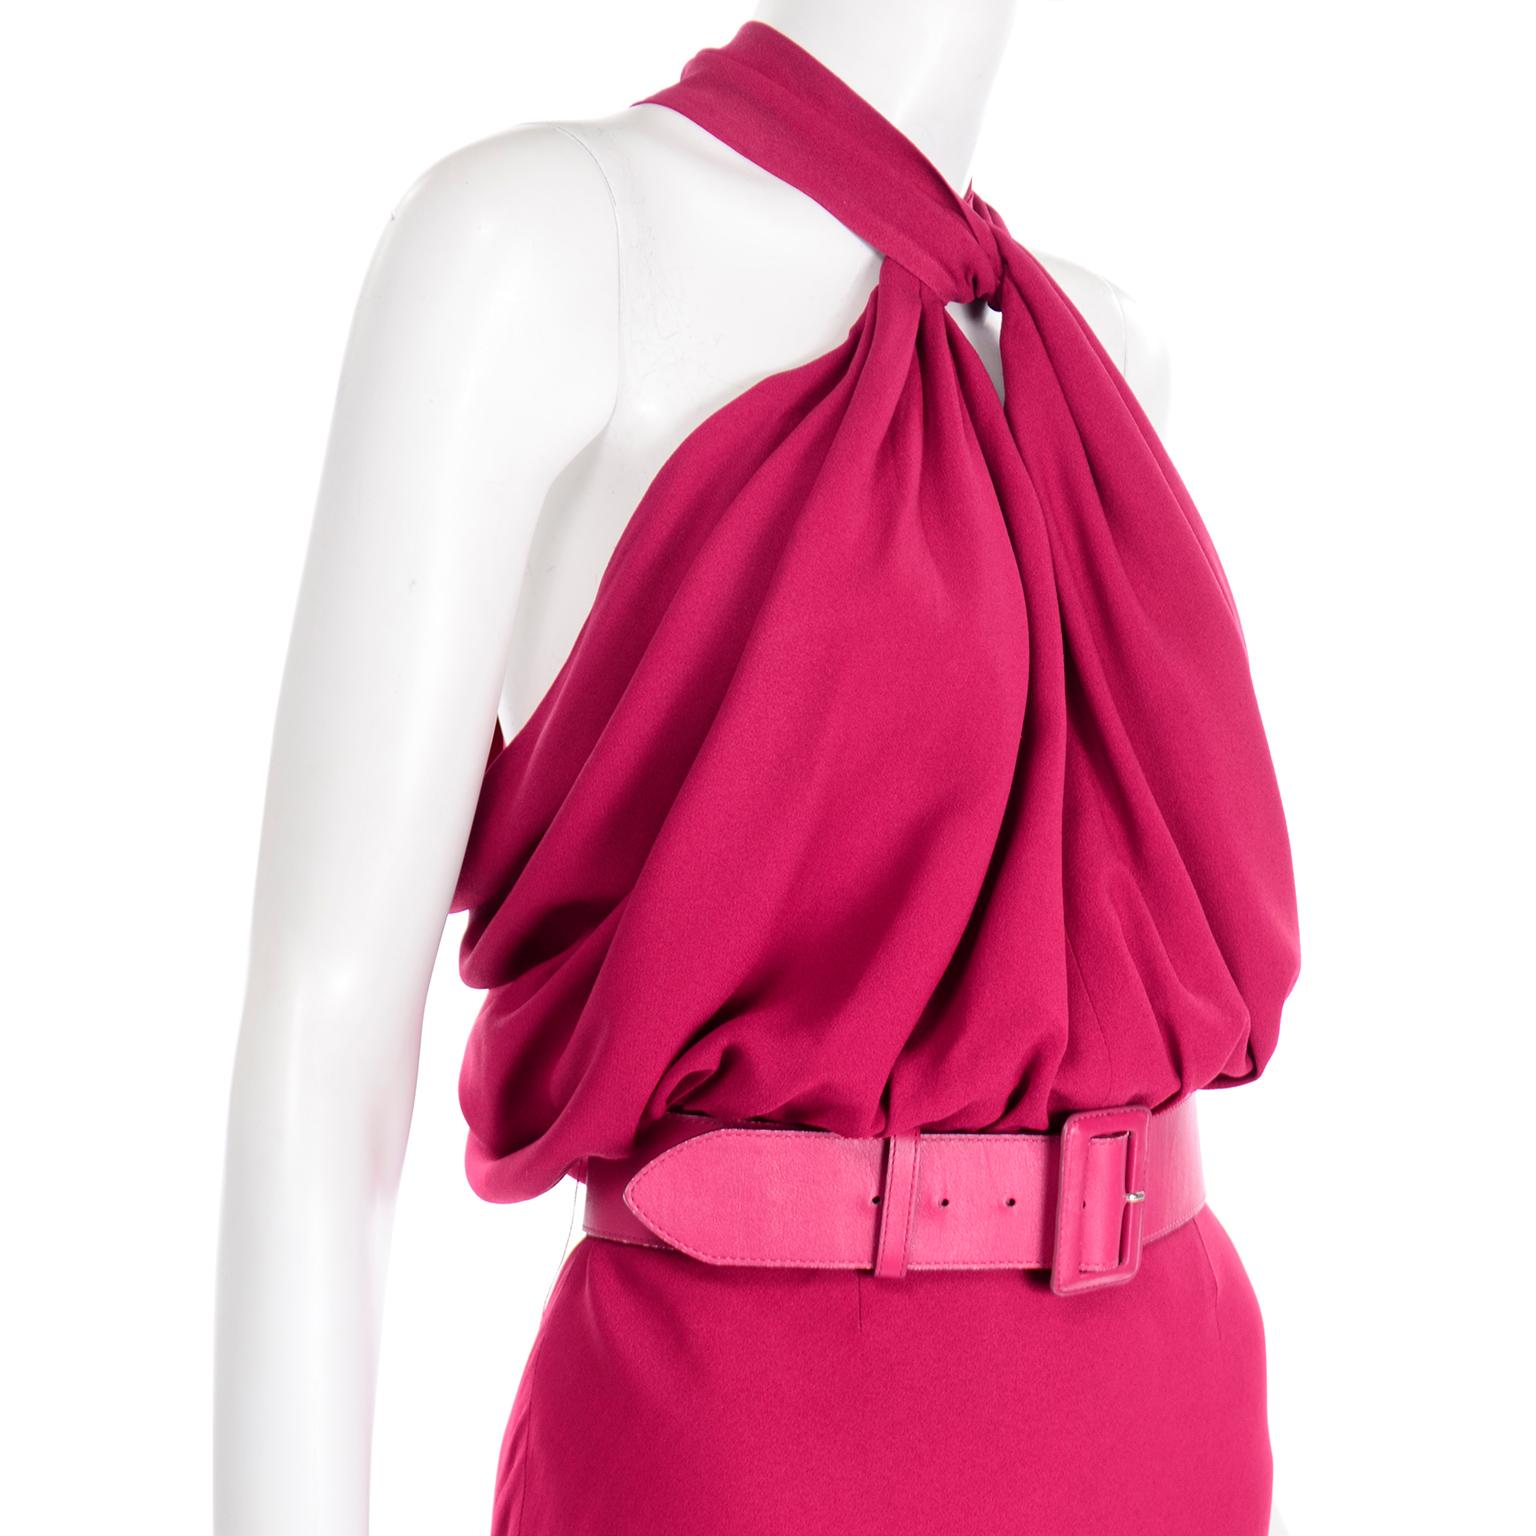 Christian Dior John Galliano Raspberry Magenta Pink 1930s Inspired Evening Dress 2